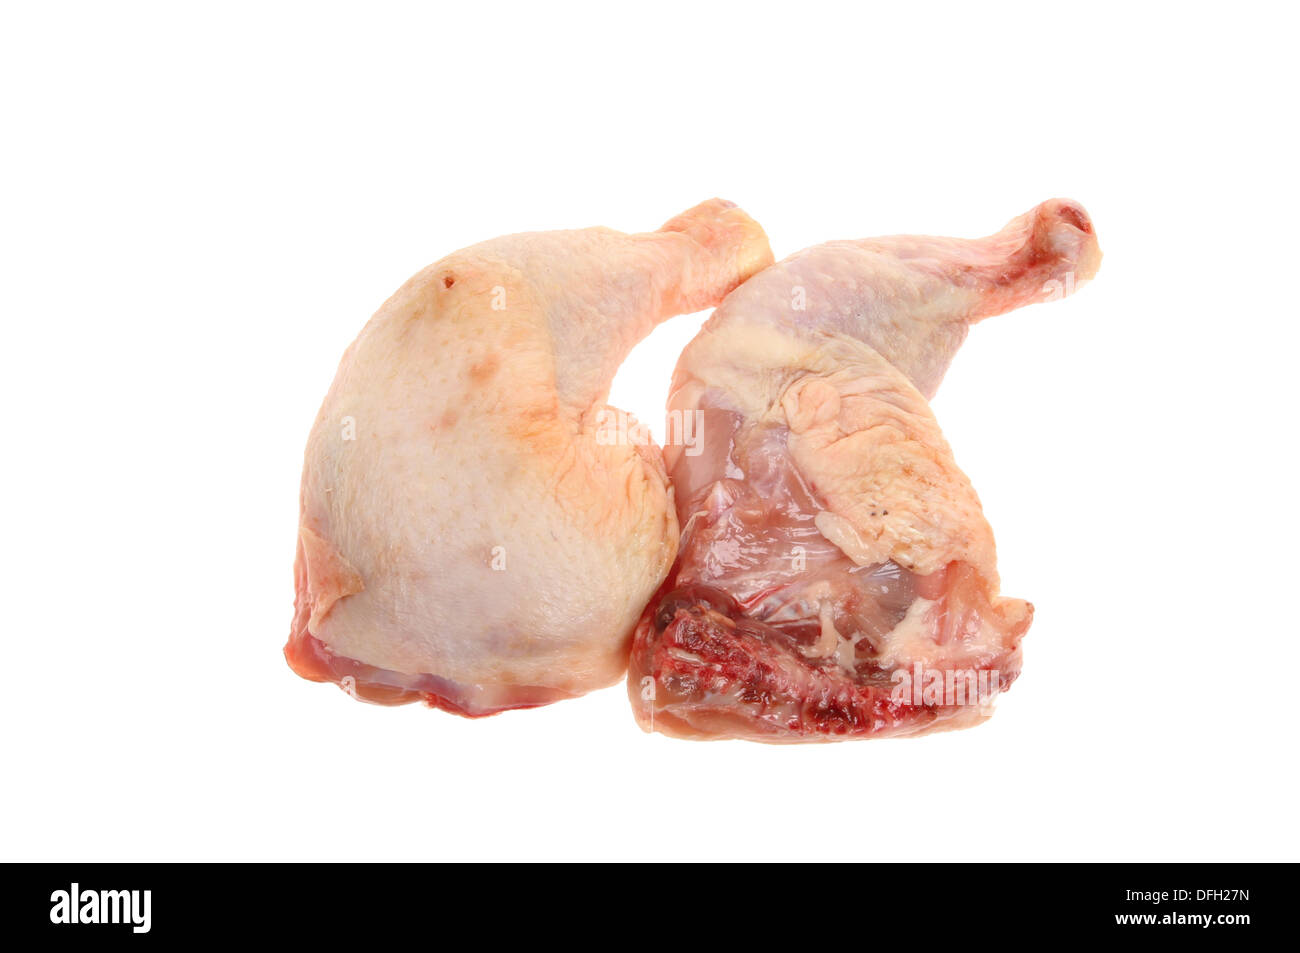 Dos piernas de pollo cruda contra un blanco aislado Foto de stock